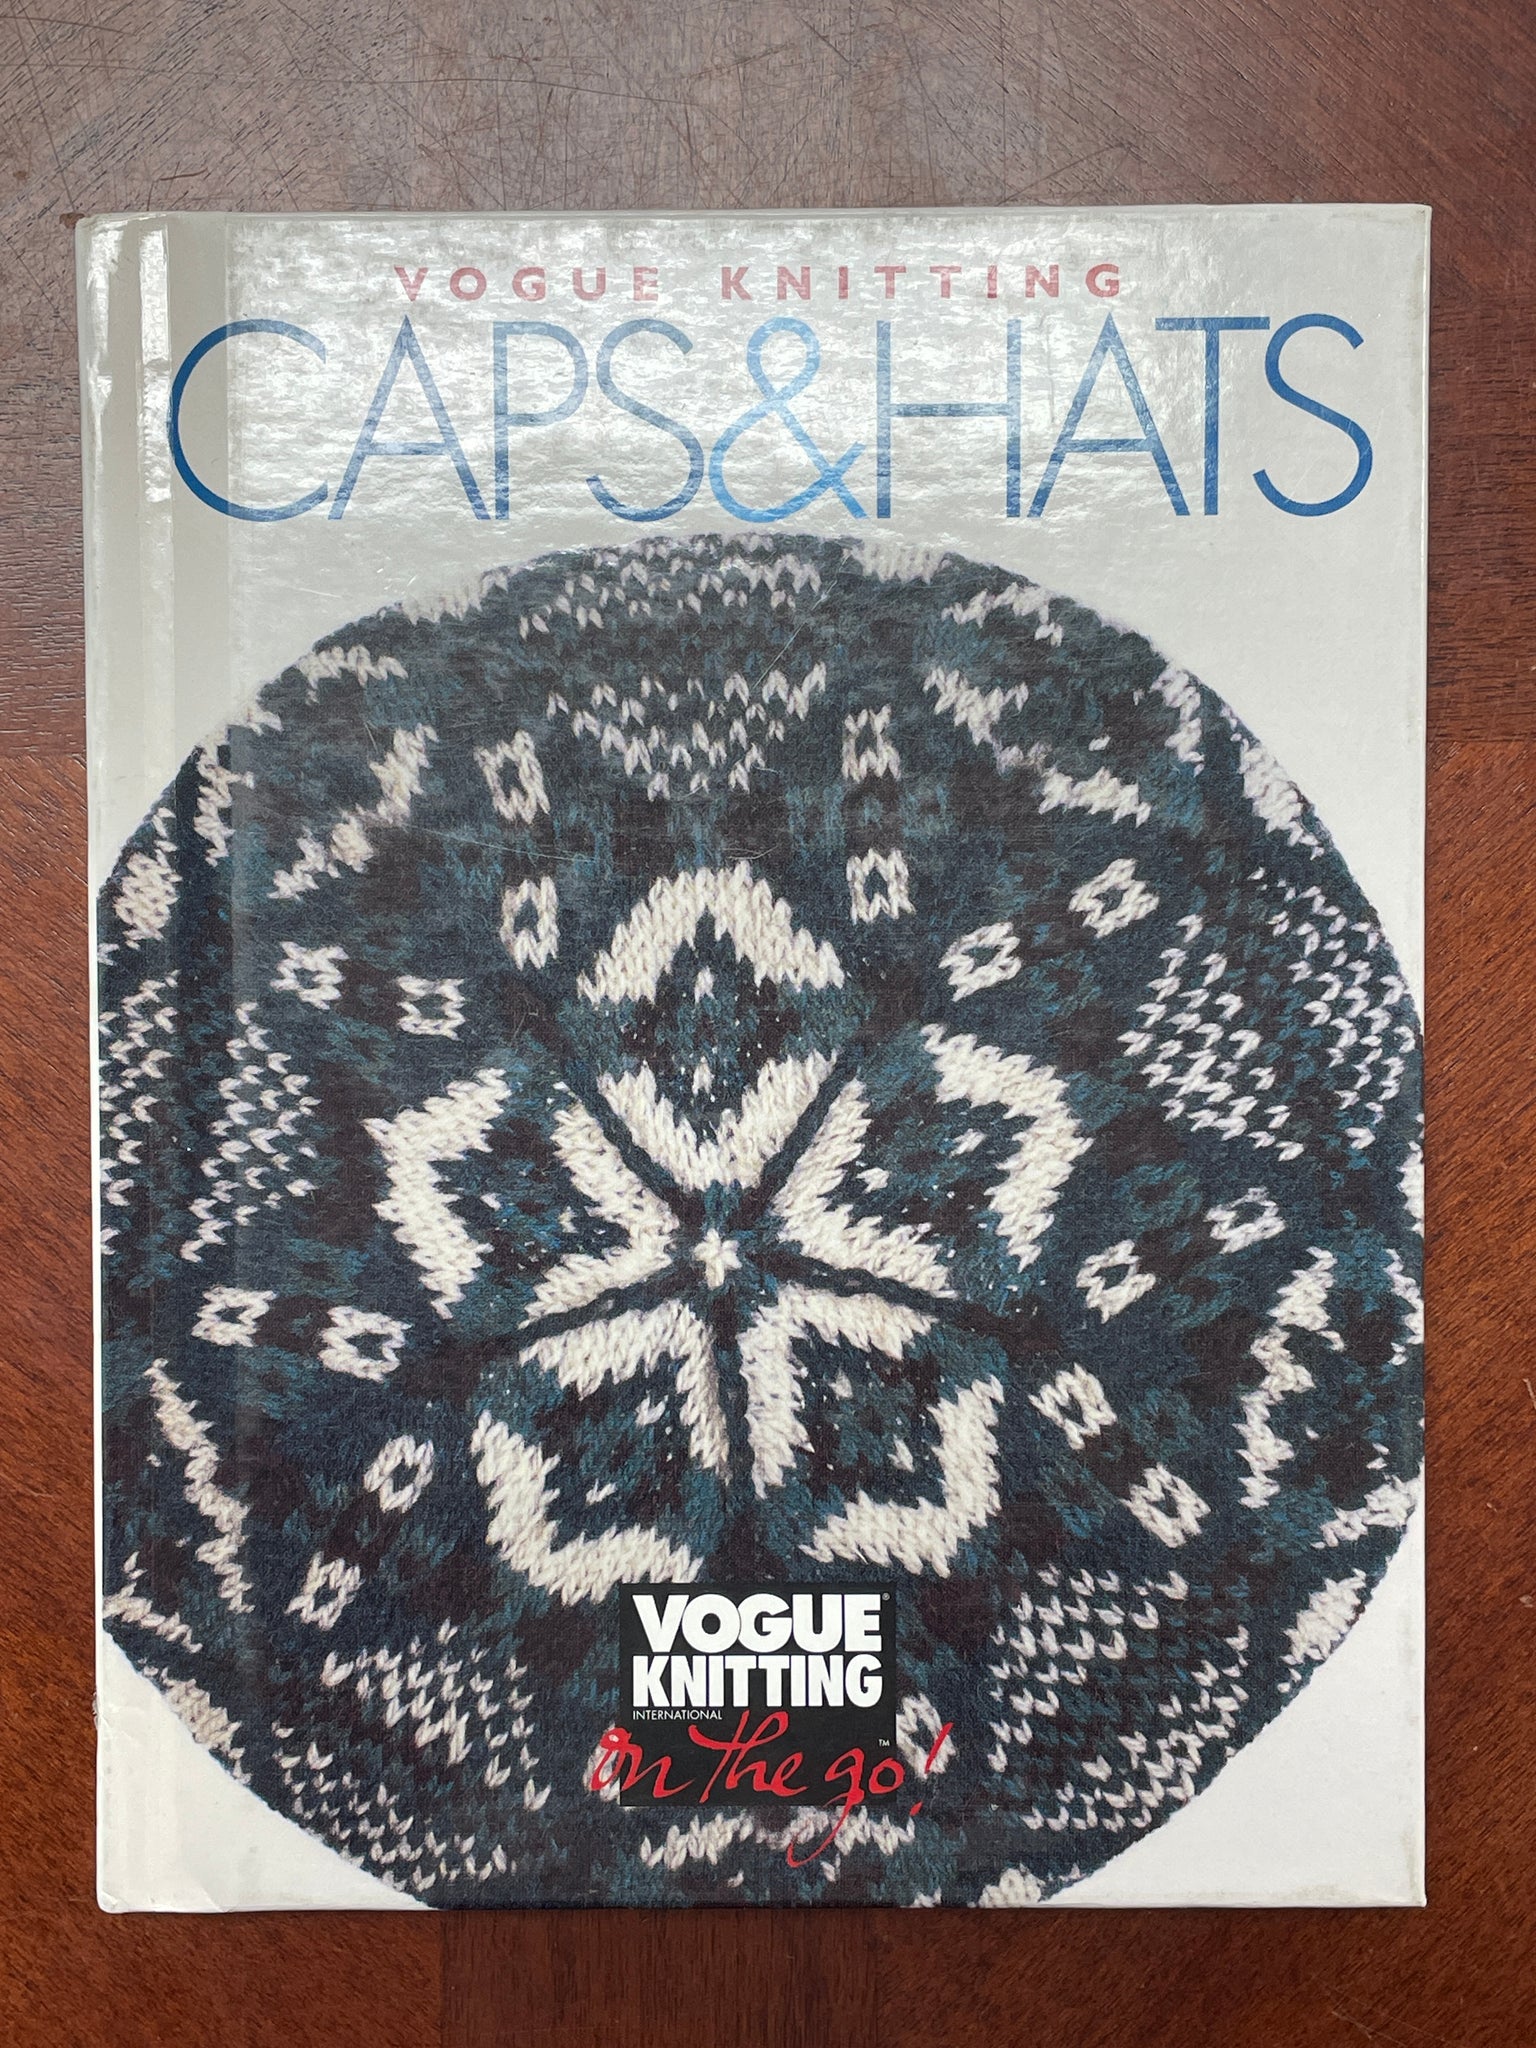 1999 Vogue Knitting - "Caps & Hats"